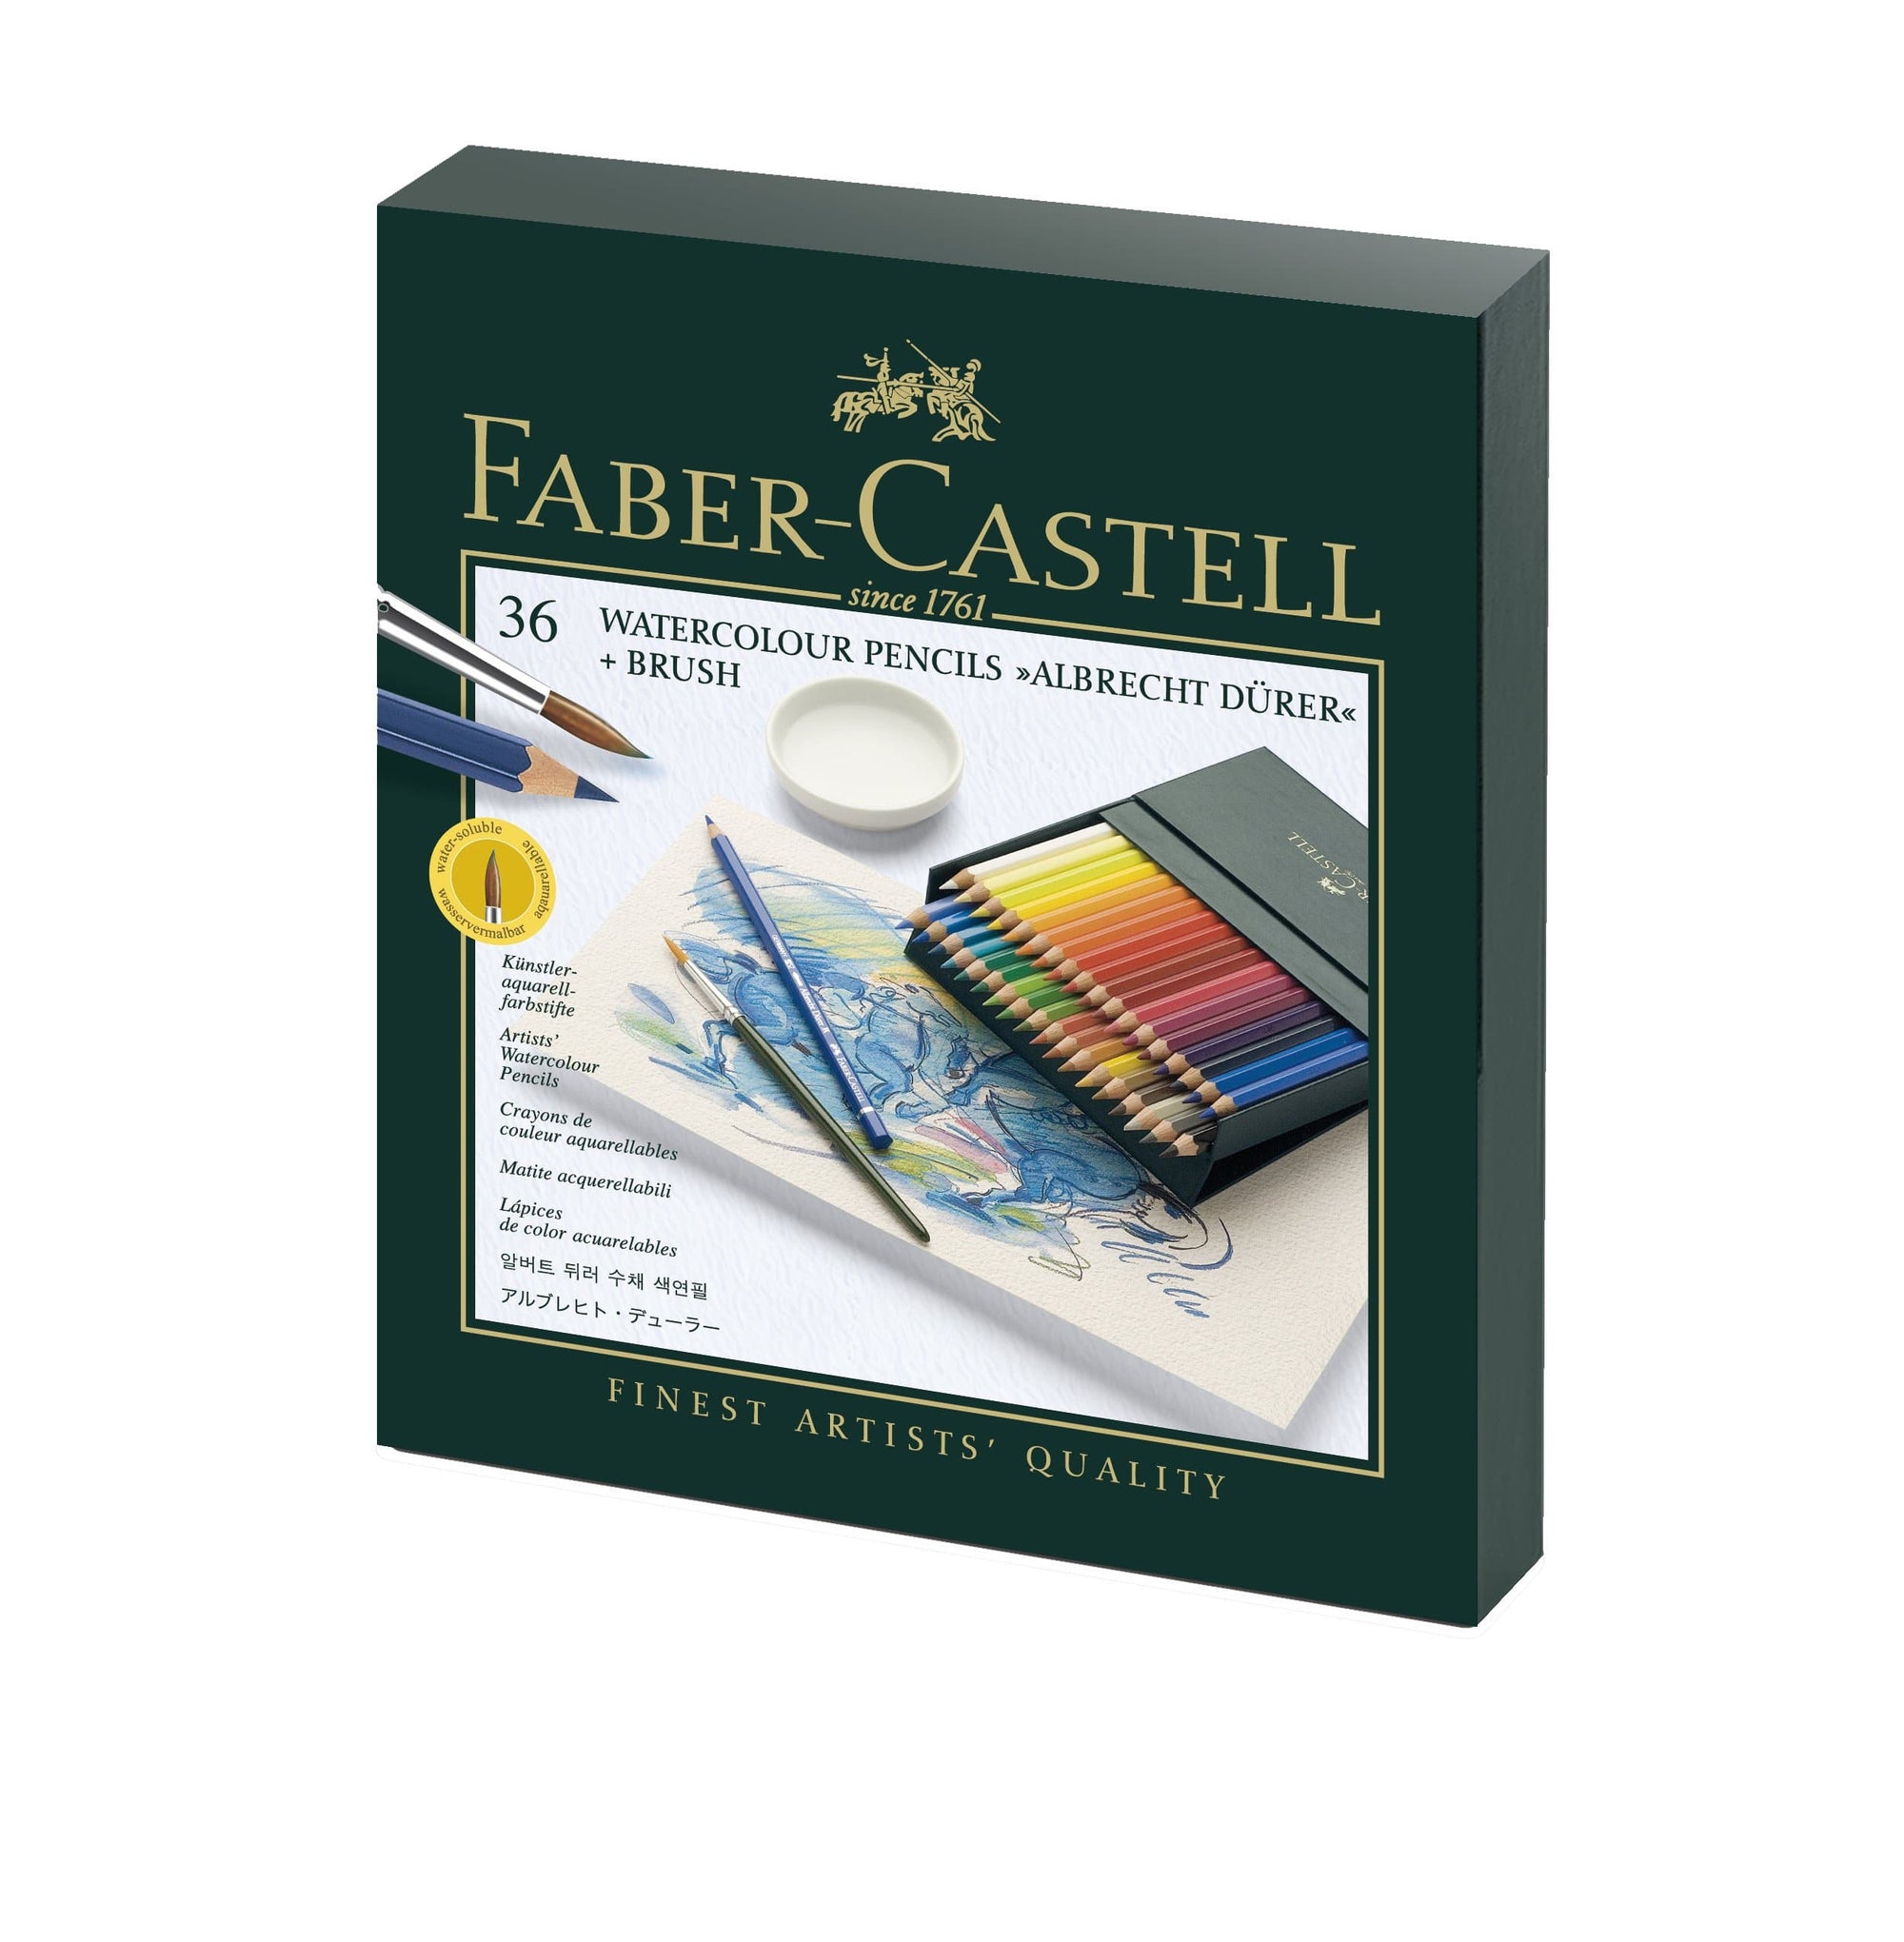 Faber-castell Watercolour pencil Albrecht Dürer Studio box of 36 - Blesket Canada